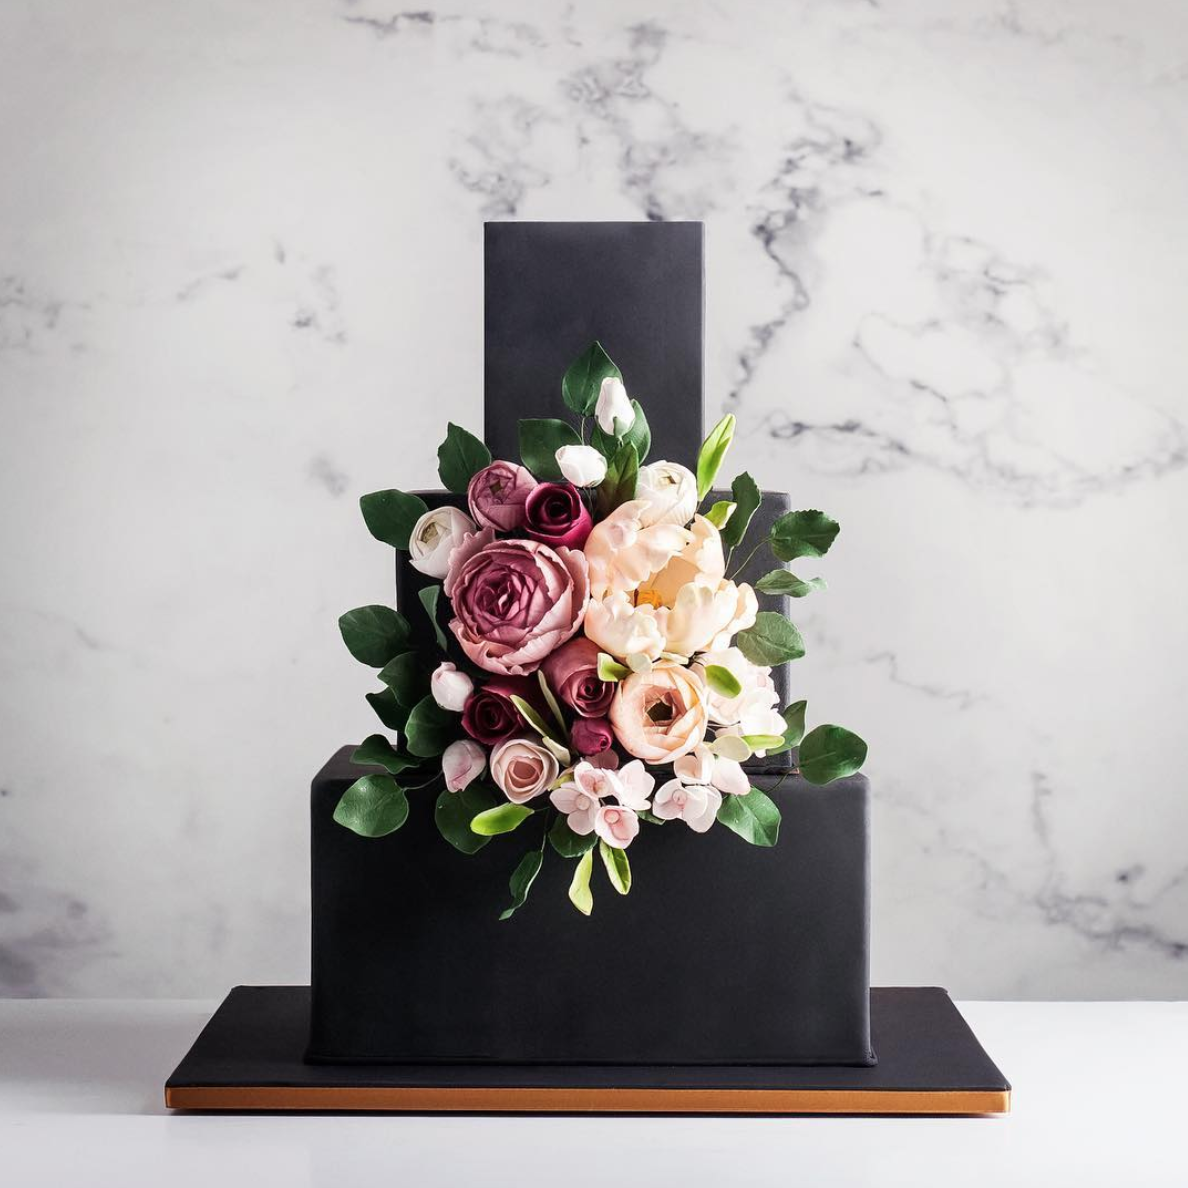 most beautiful wedding cakes